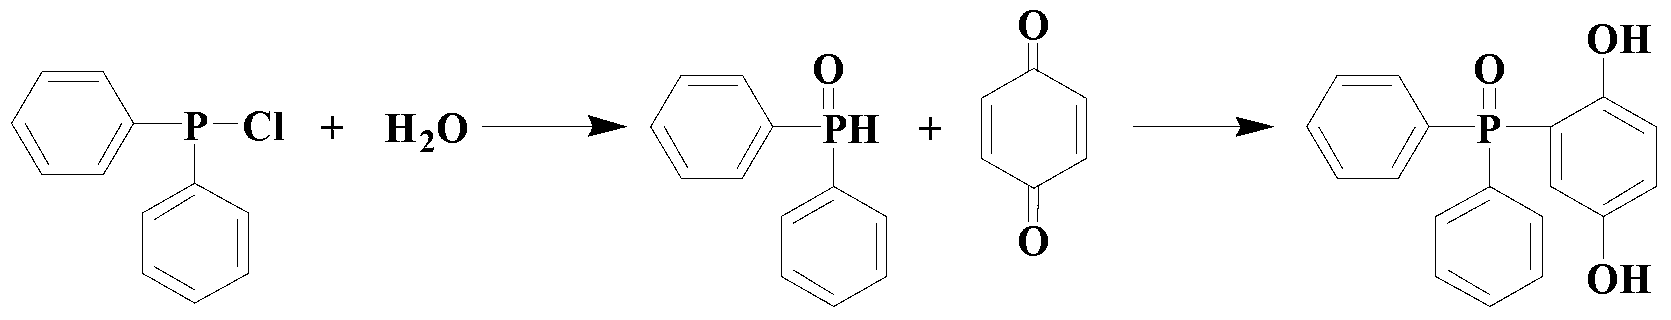 Environment-friendly preparation method of phosphorus flame retardant, namely 2-(diphenylphosphinoyl)-1, 4-benzenediol